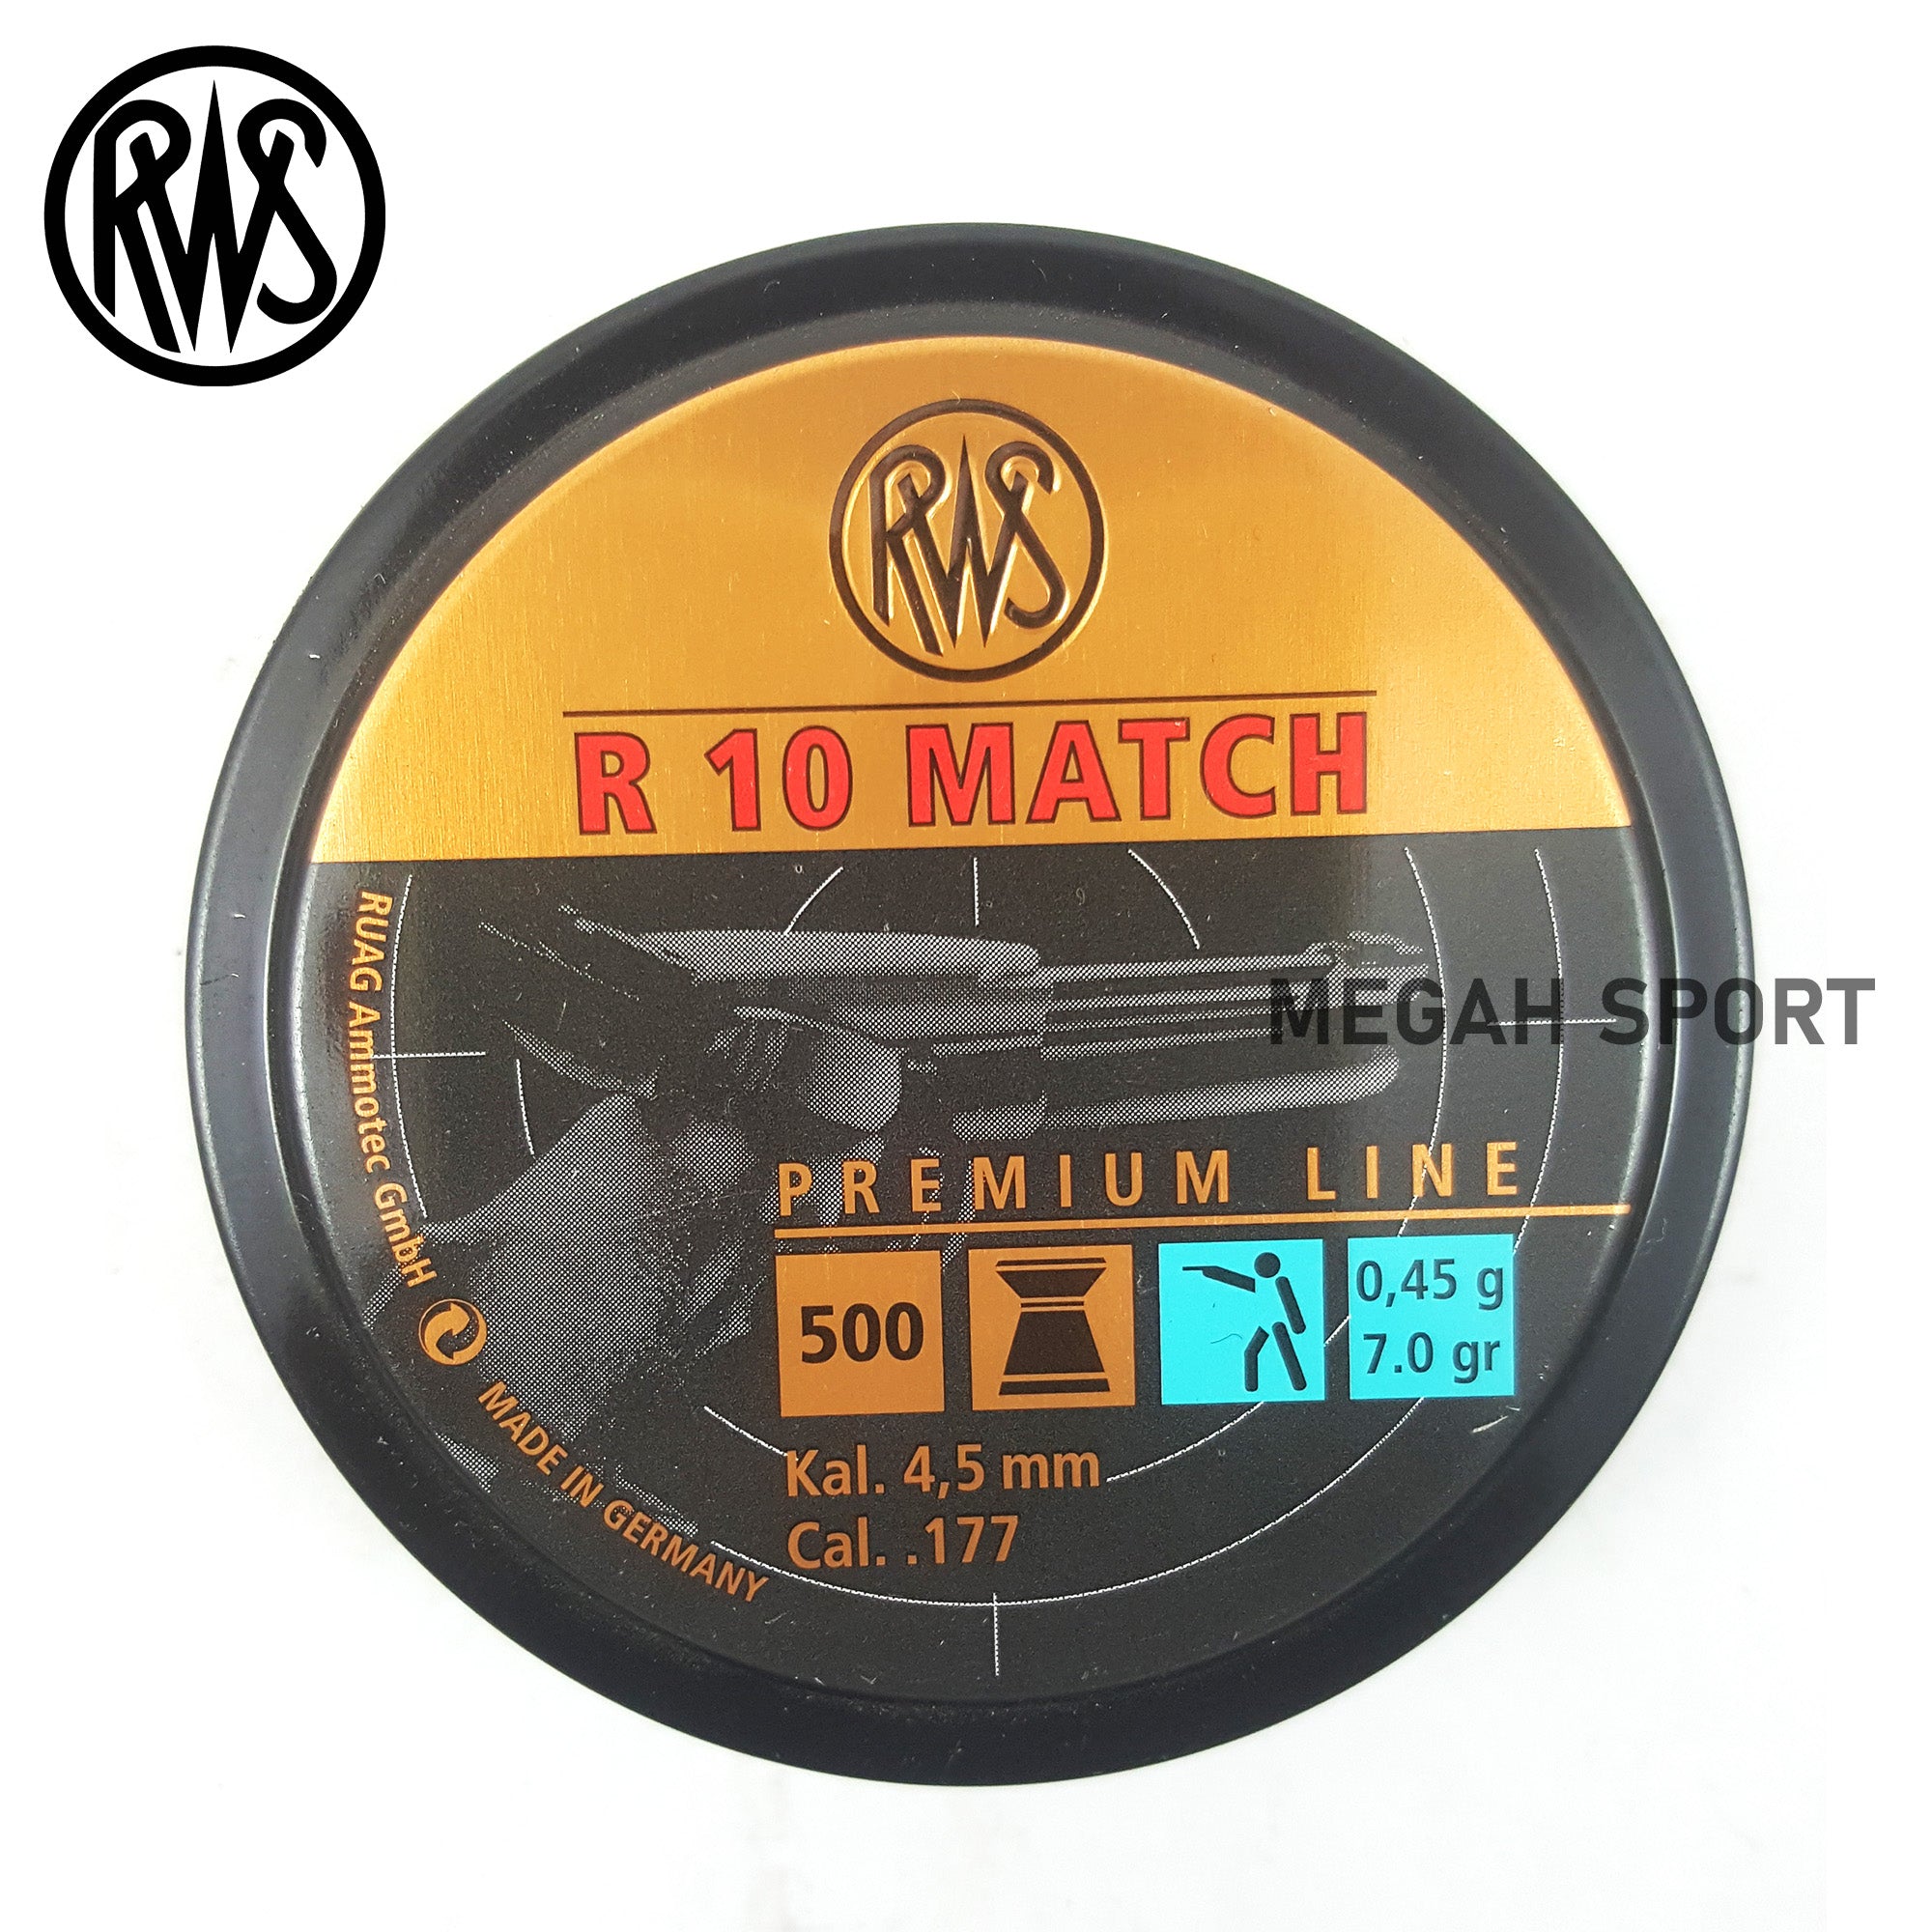 RWS R10 MATCH PISTOL 7,0 gr (PE309) - Megah Sport